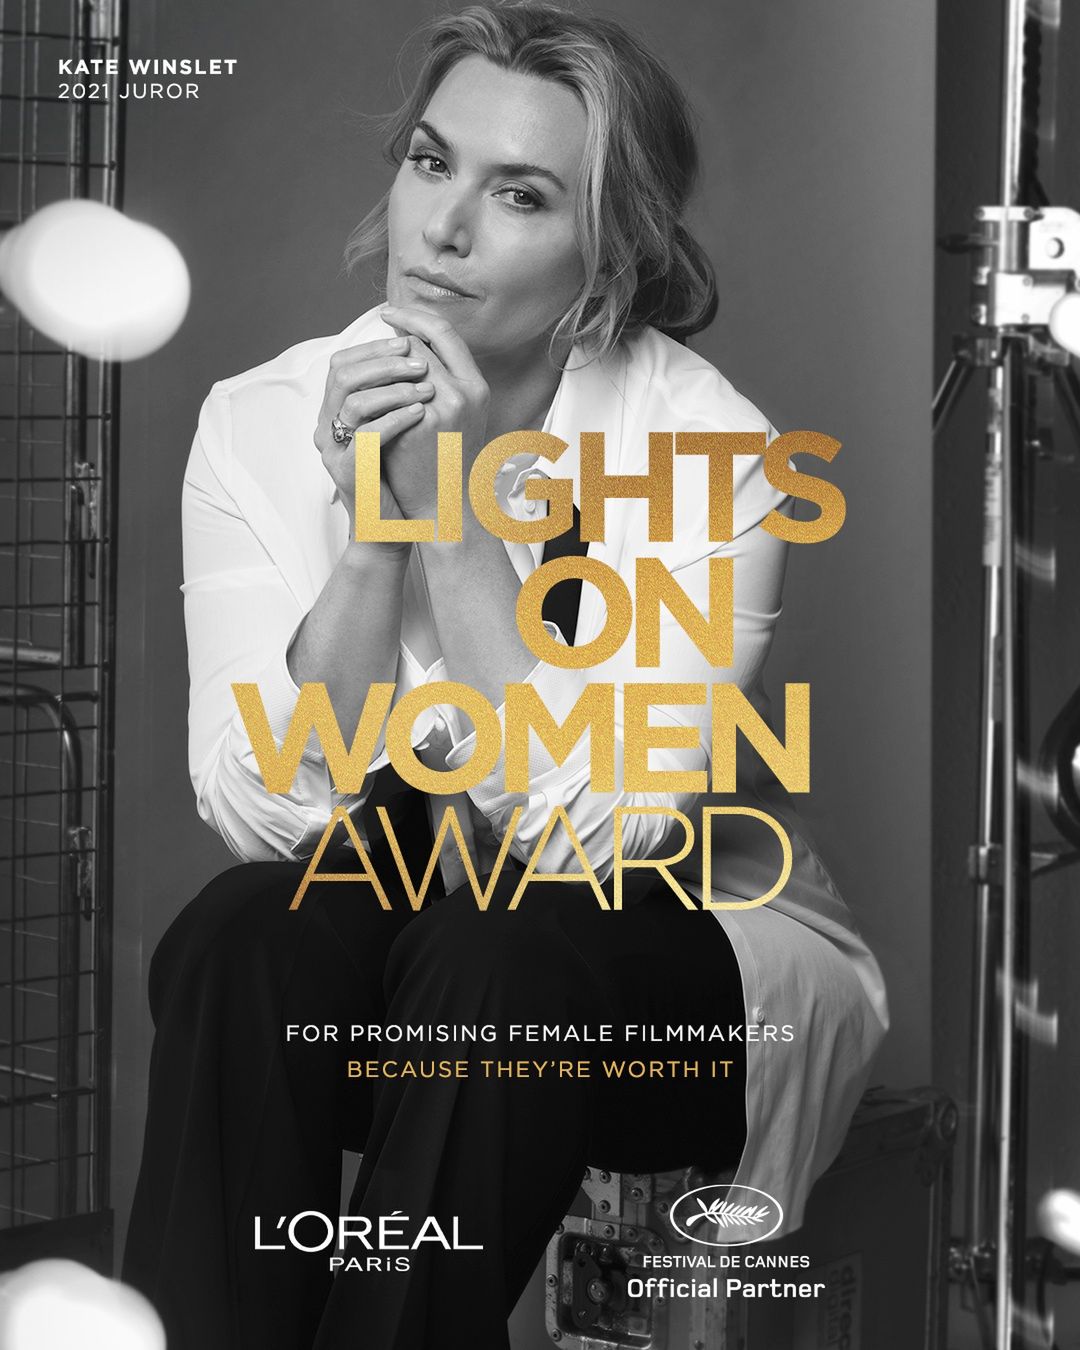 LIGHTS ON WOMEN AWARD by L'ORÉAL PARIS - Kate Winslet